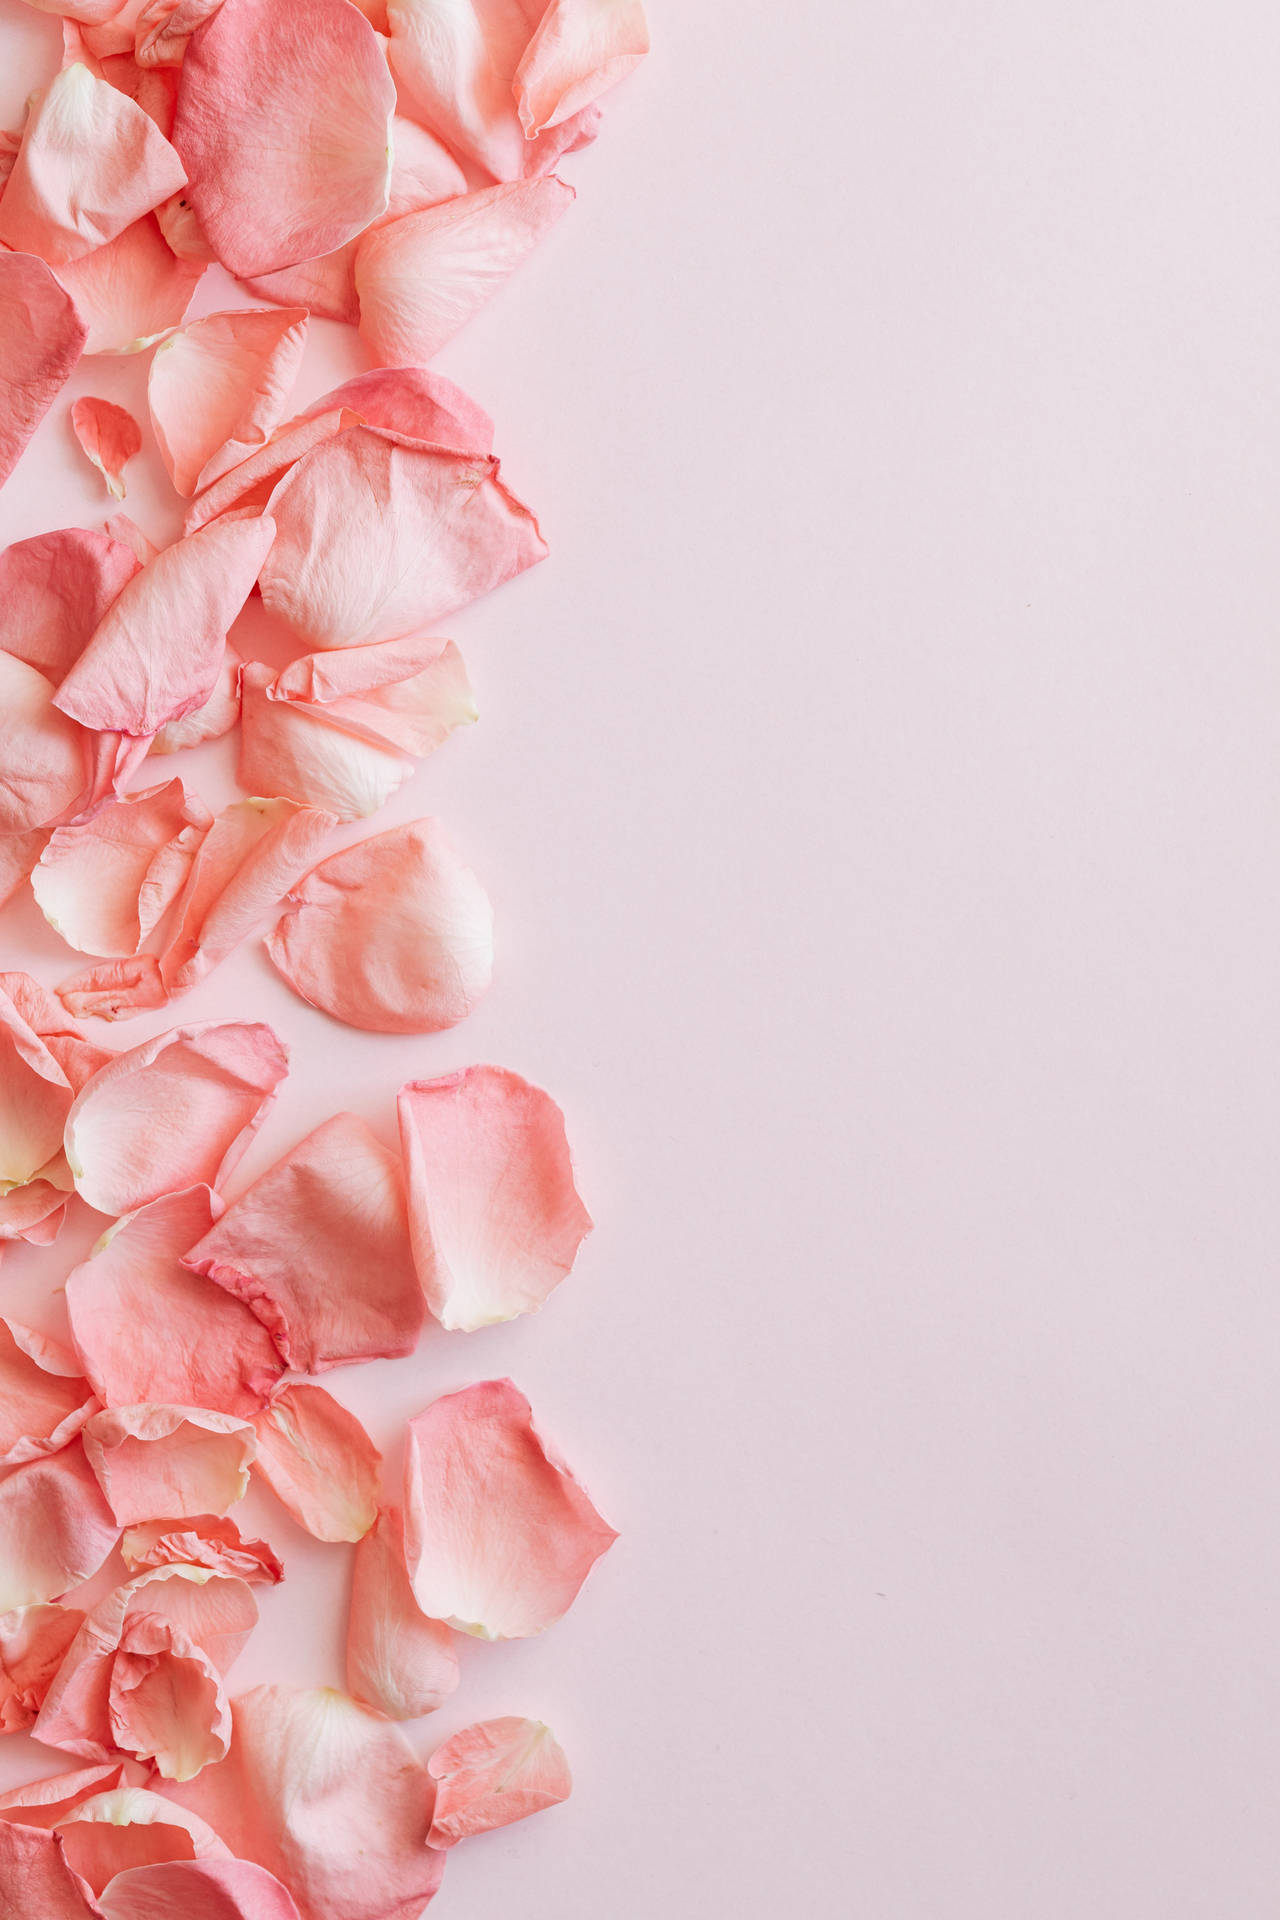 Minimalist Rose Petals In Pastel Pink